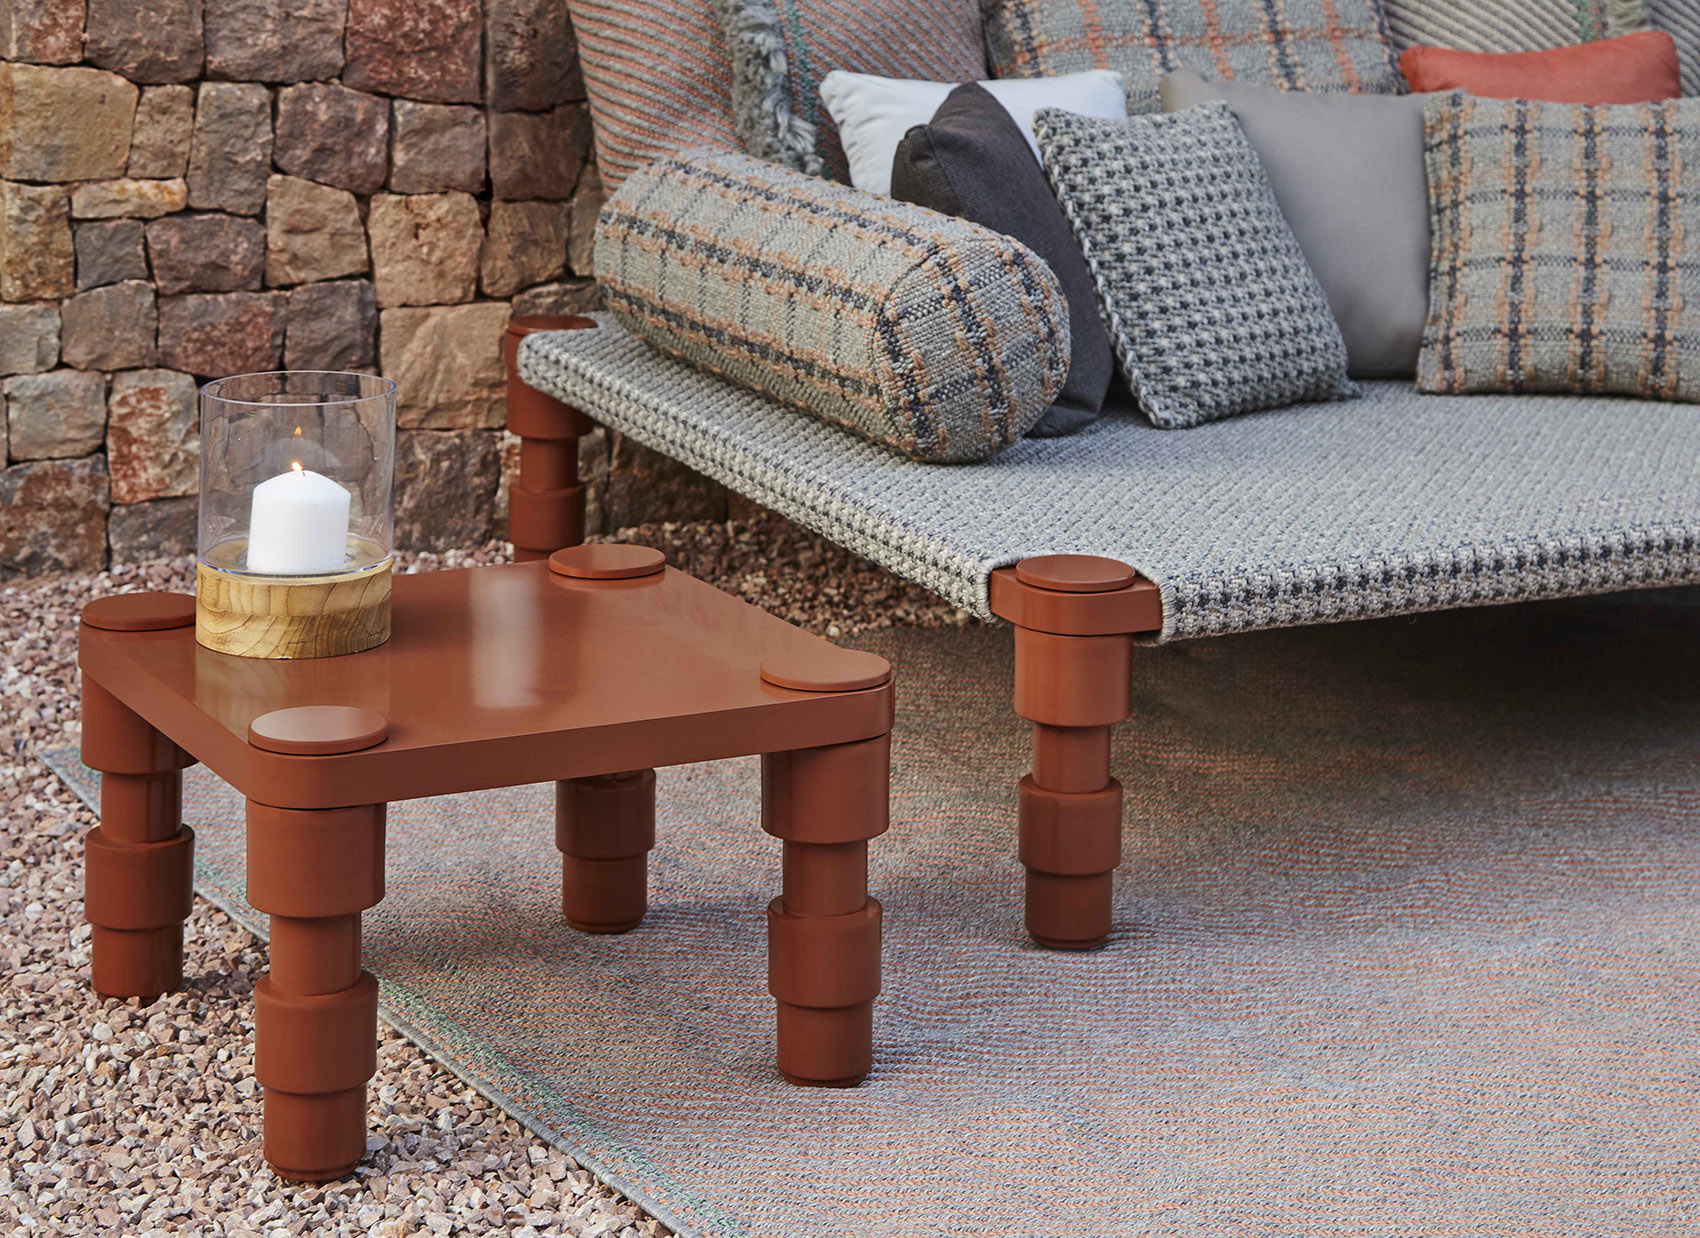 Garden Layers印度床与边桌系列/灵感源于莫卧儿帝国的古老习俗-122